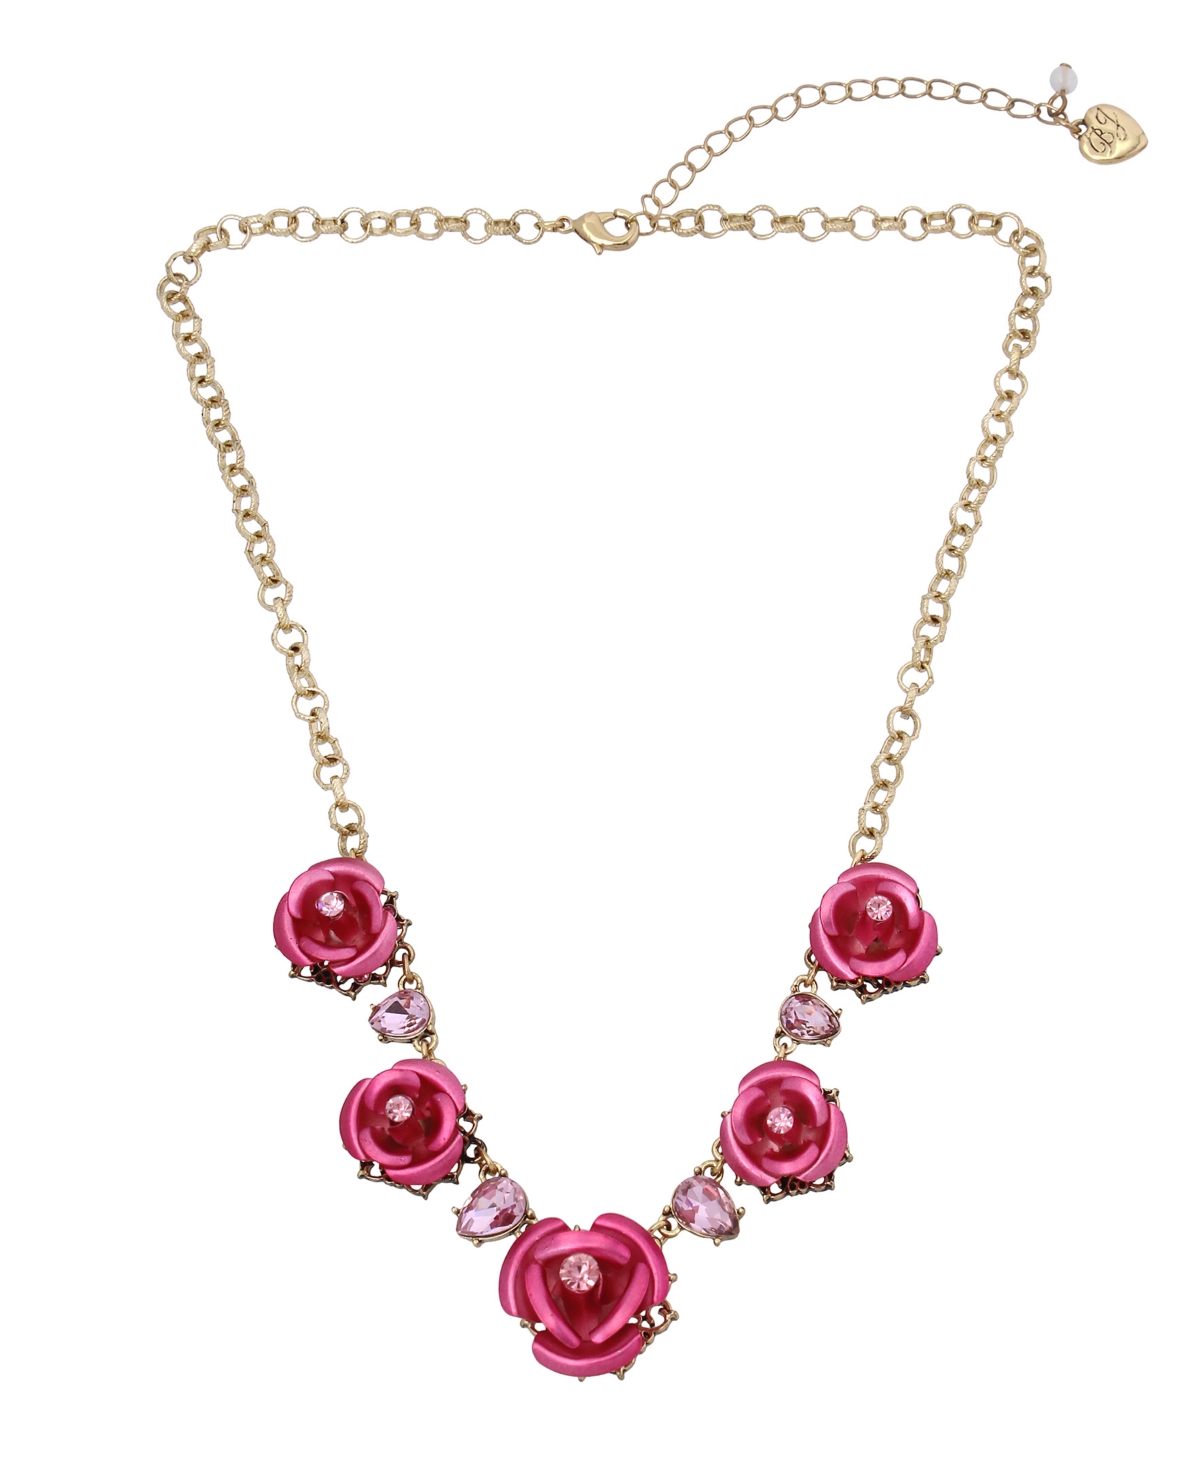 Betsey Johnson Rose Bib Necklace In Light Pink